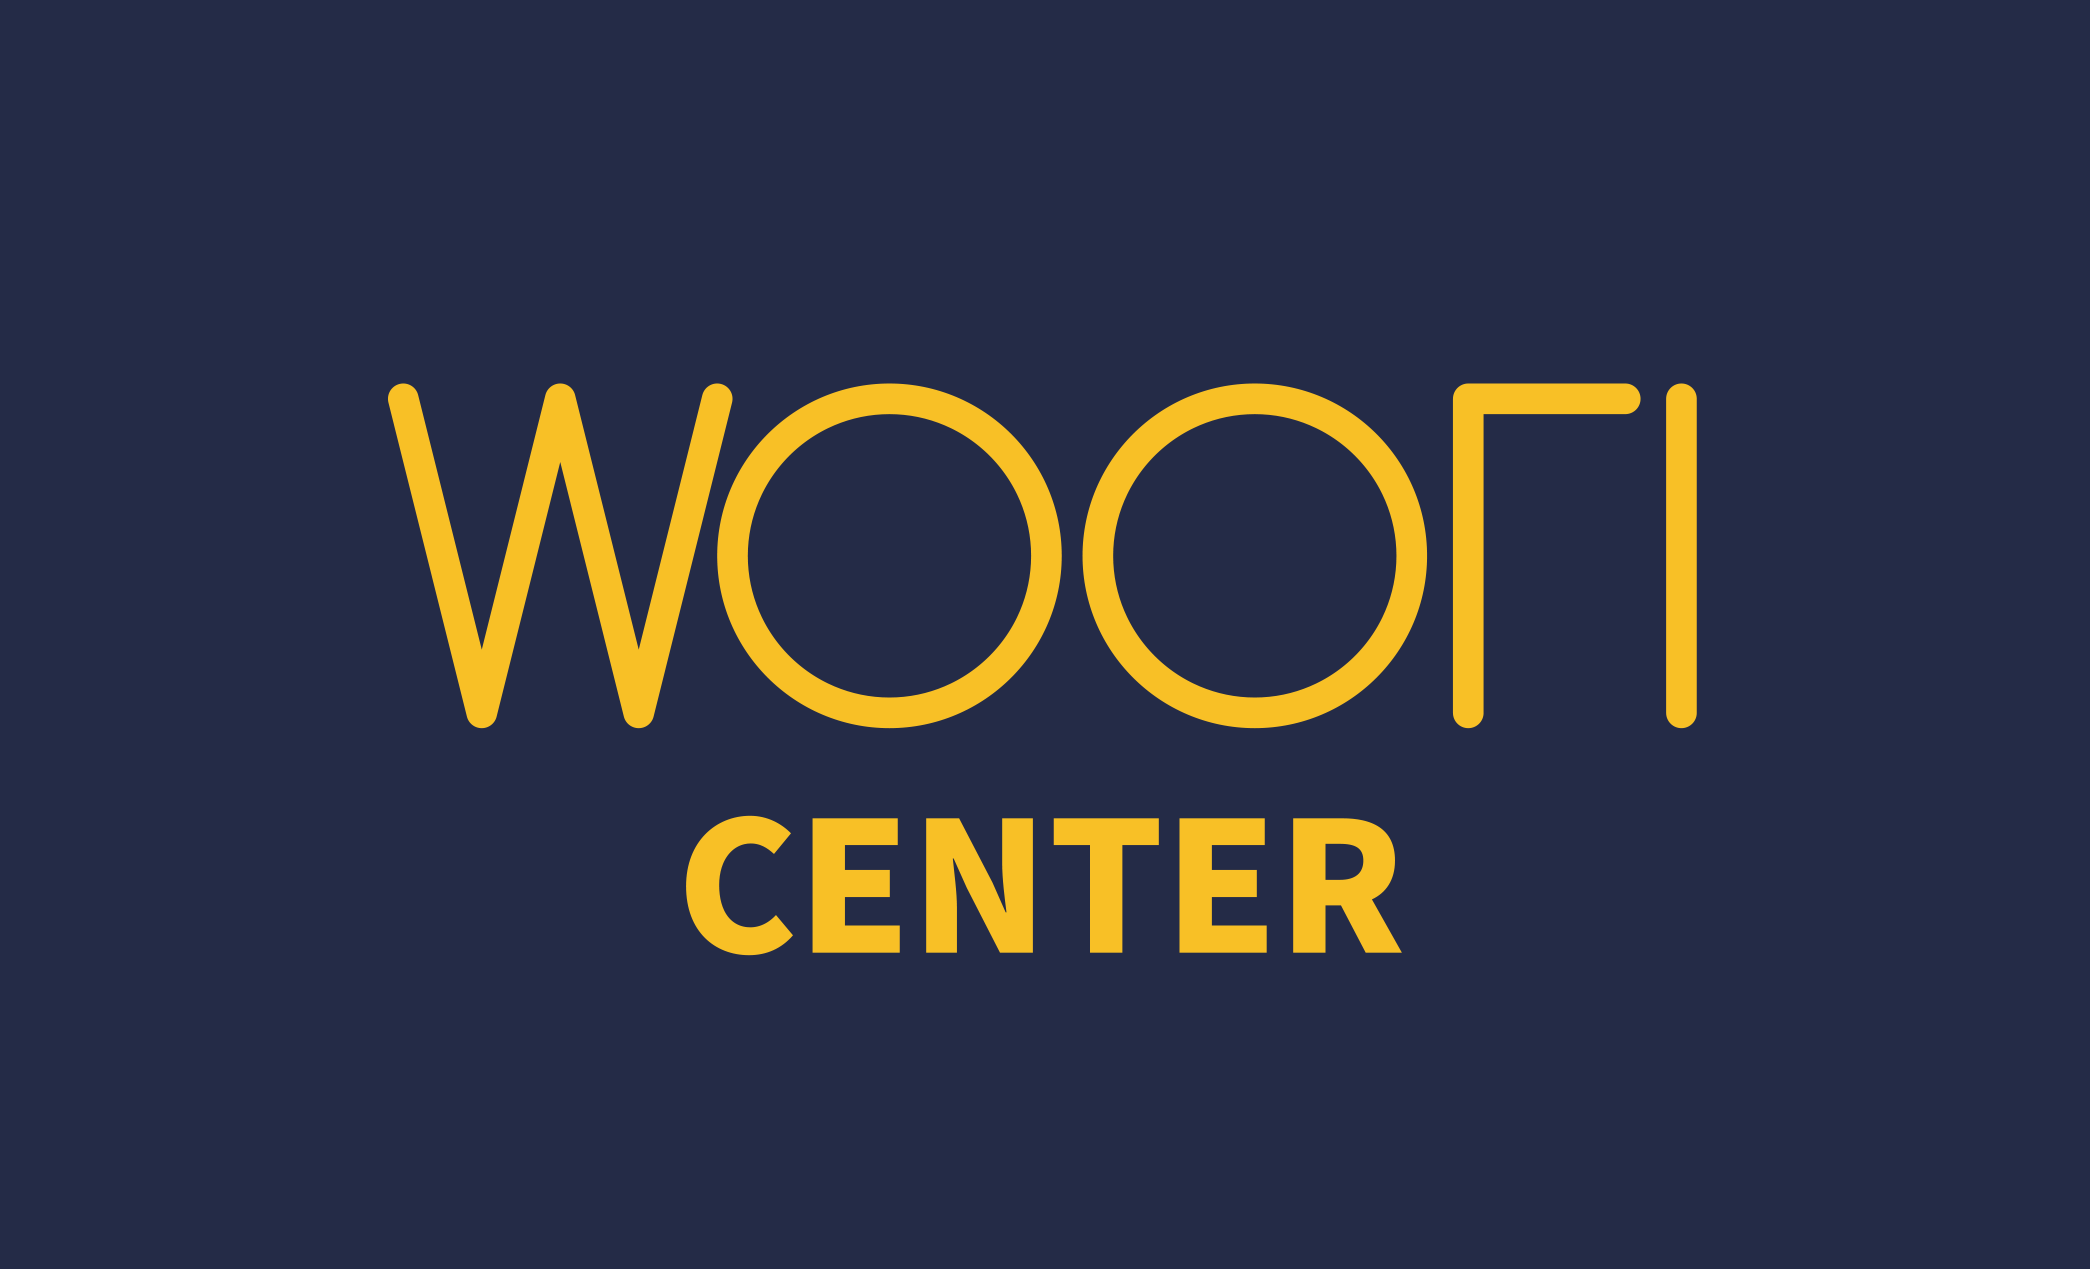 Woori Center